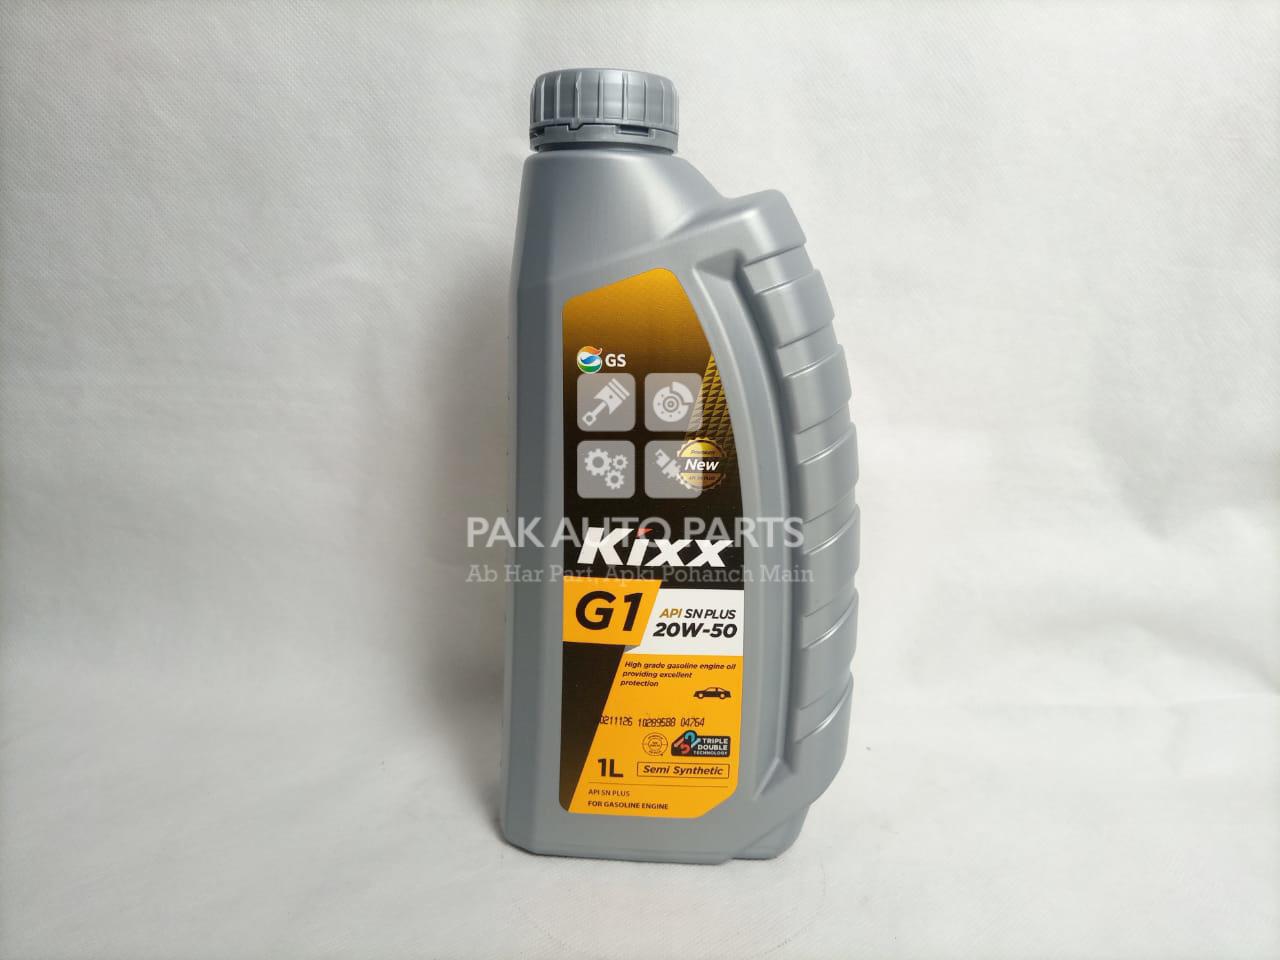 Picture of Kixx G1 API SN PLUS 20W-50 (1L) High grade gasoline engine oil providing excellent protection